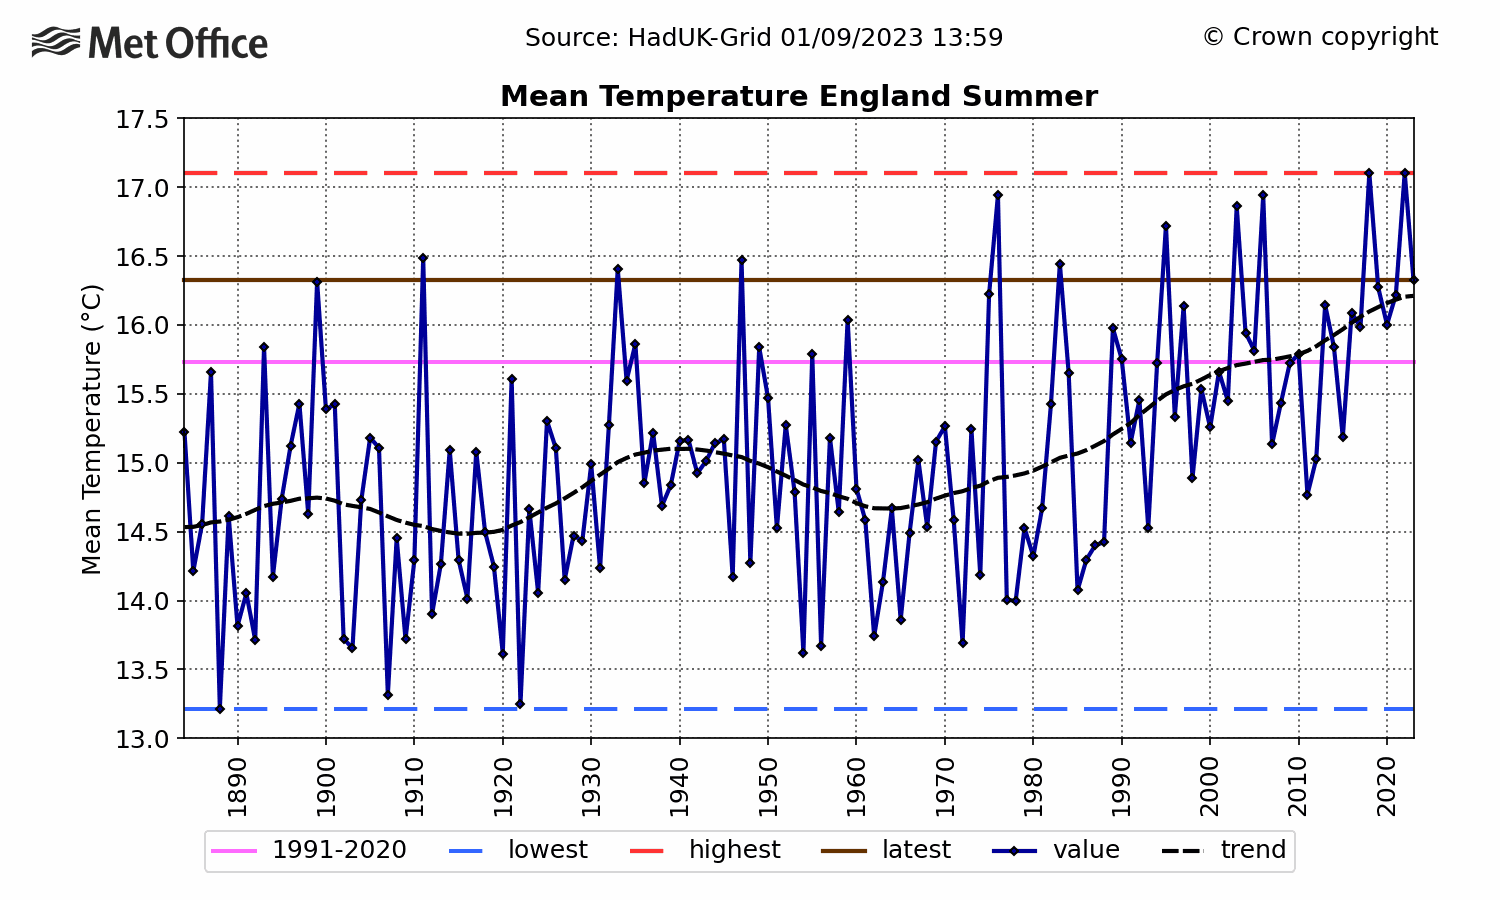 England Mean temperature - Summer